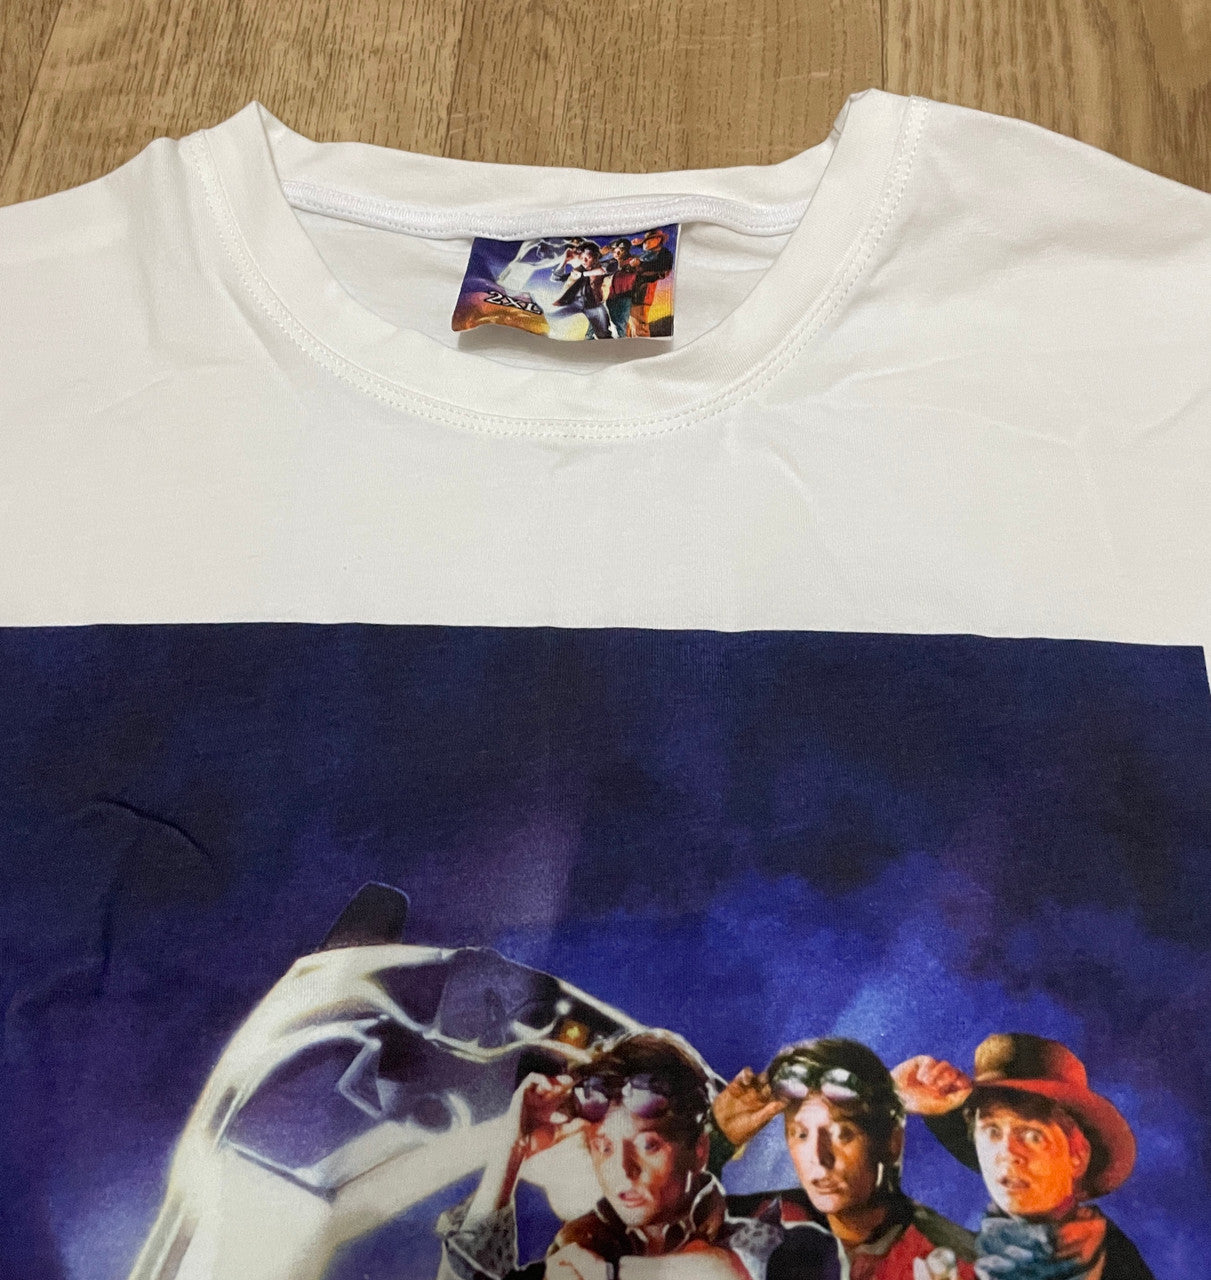 Back To The Future KiSS T-Shirt - Trilogy Art - Marty McFly 80s Delorean, Doc - Michael J Fox